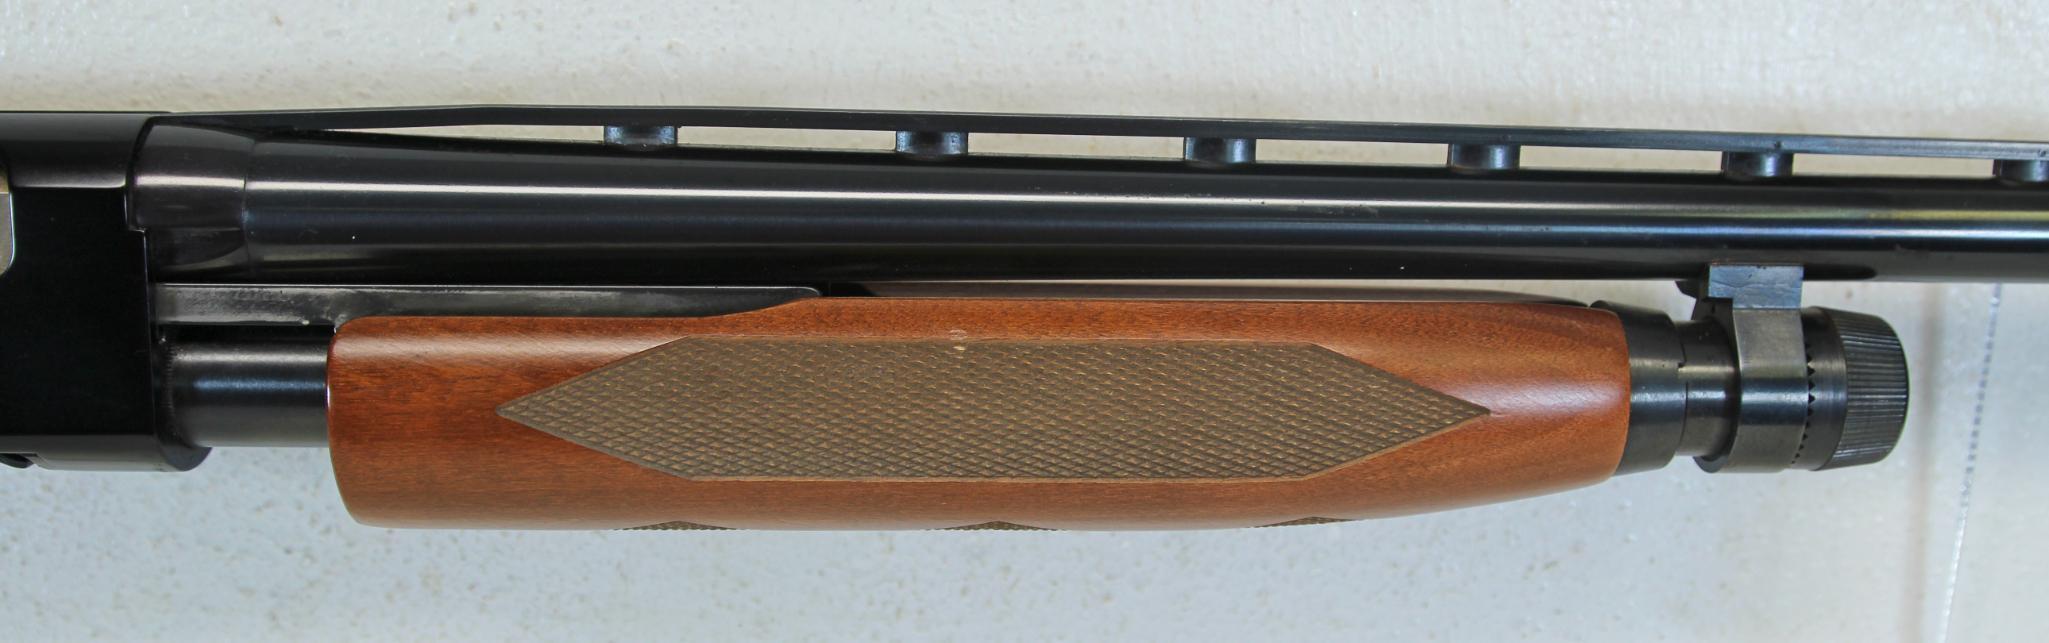 Winchester Model 1300 20 Ga. Pump Action Shotgun 28" VR Barrel... 3" Chamber w/WinChoke... SN#L25249